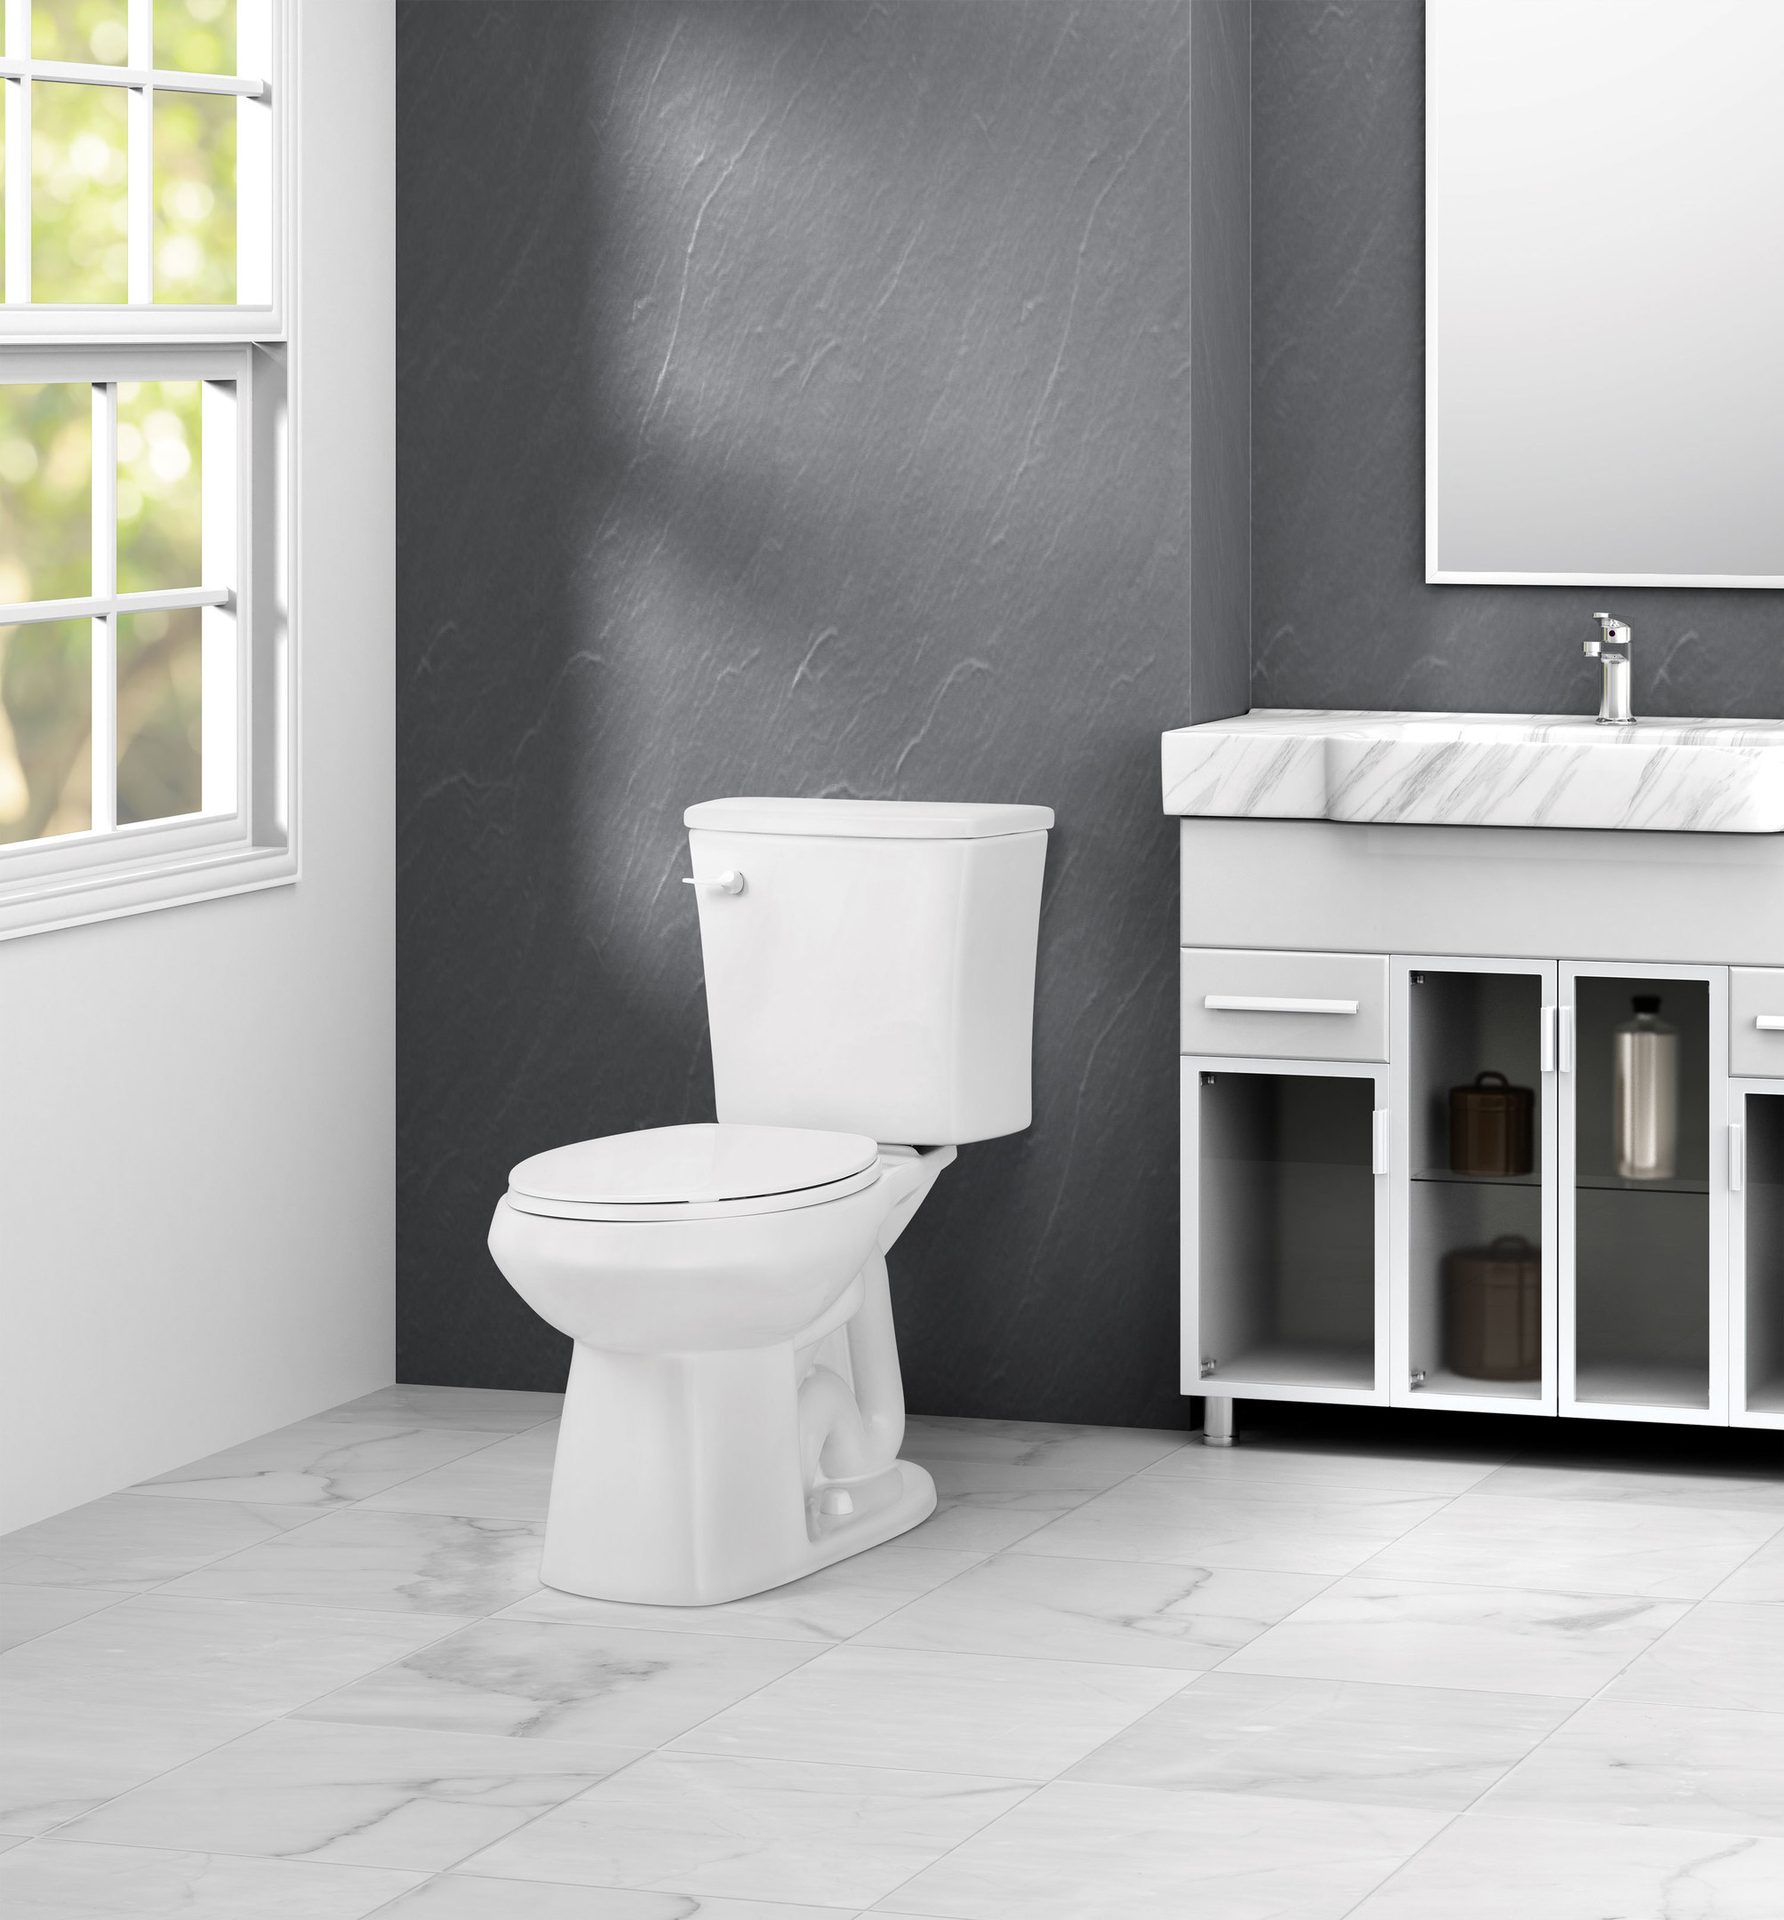 Toilet seat, Plumbing fixture, Interior design, Property, White, Window, Bathroom, Wood, Style